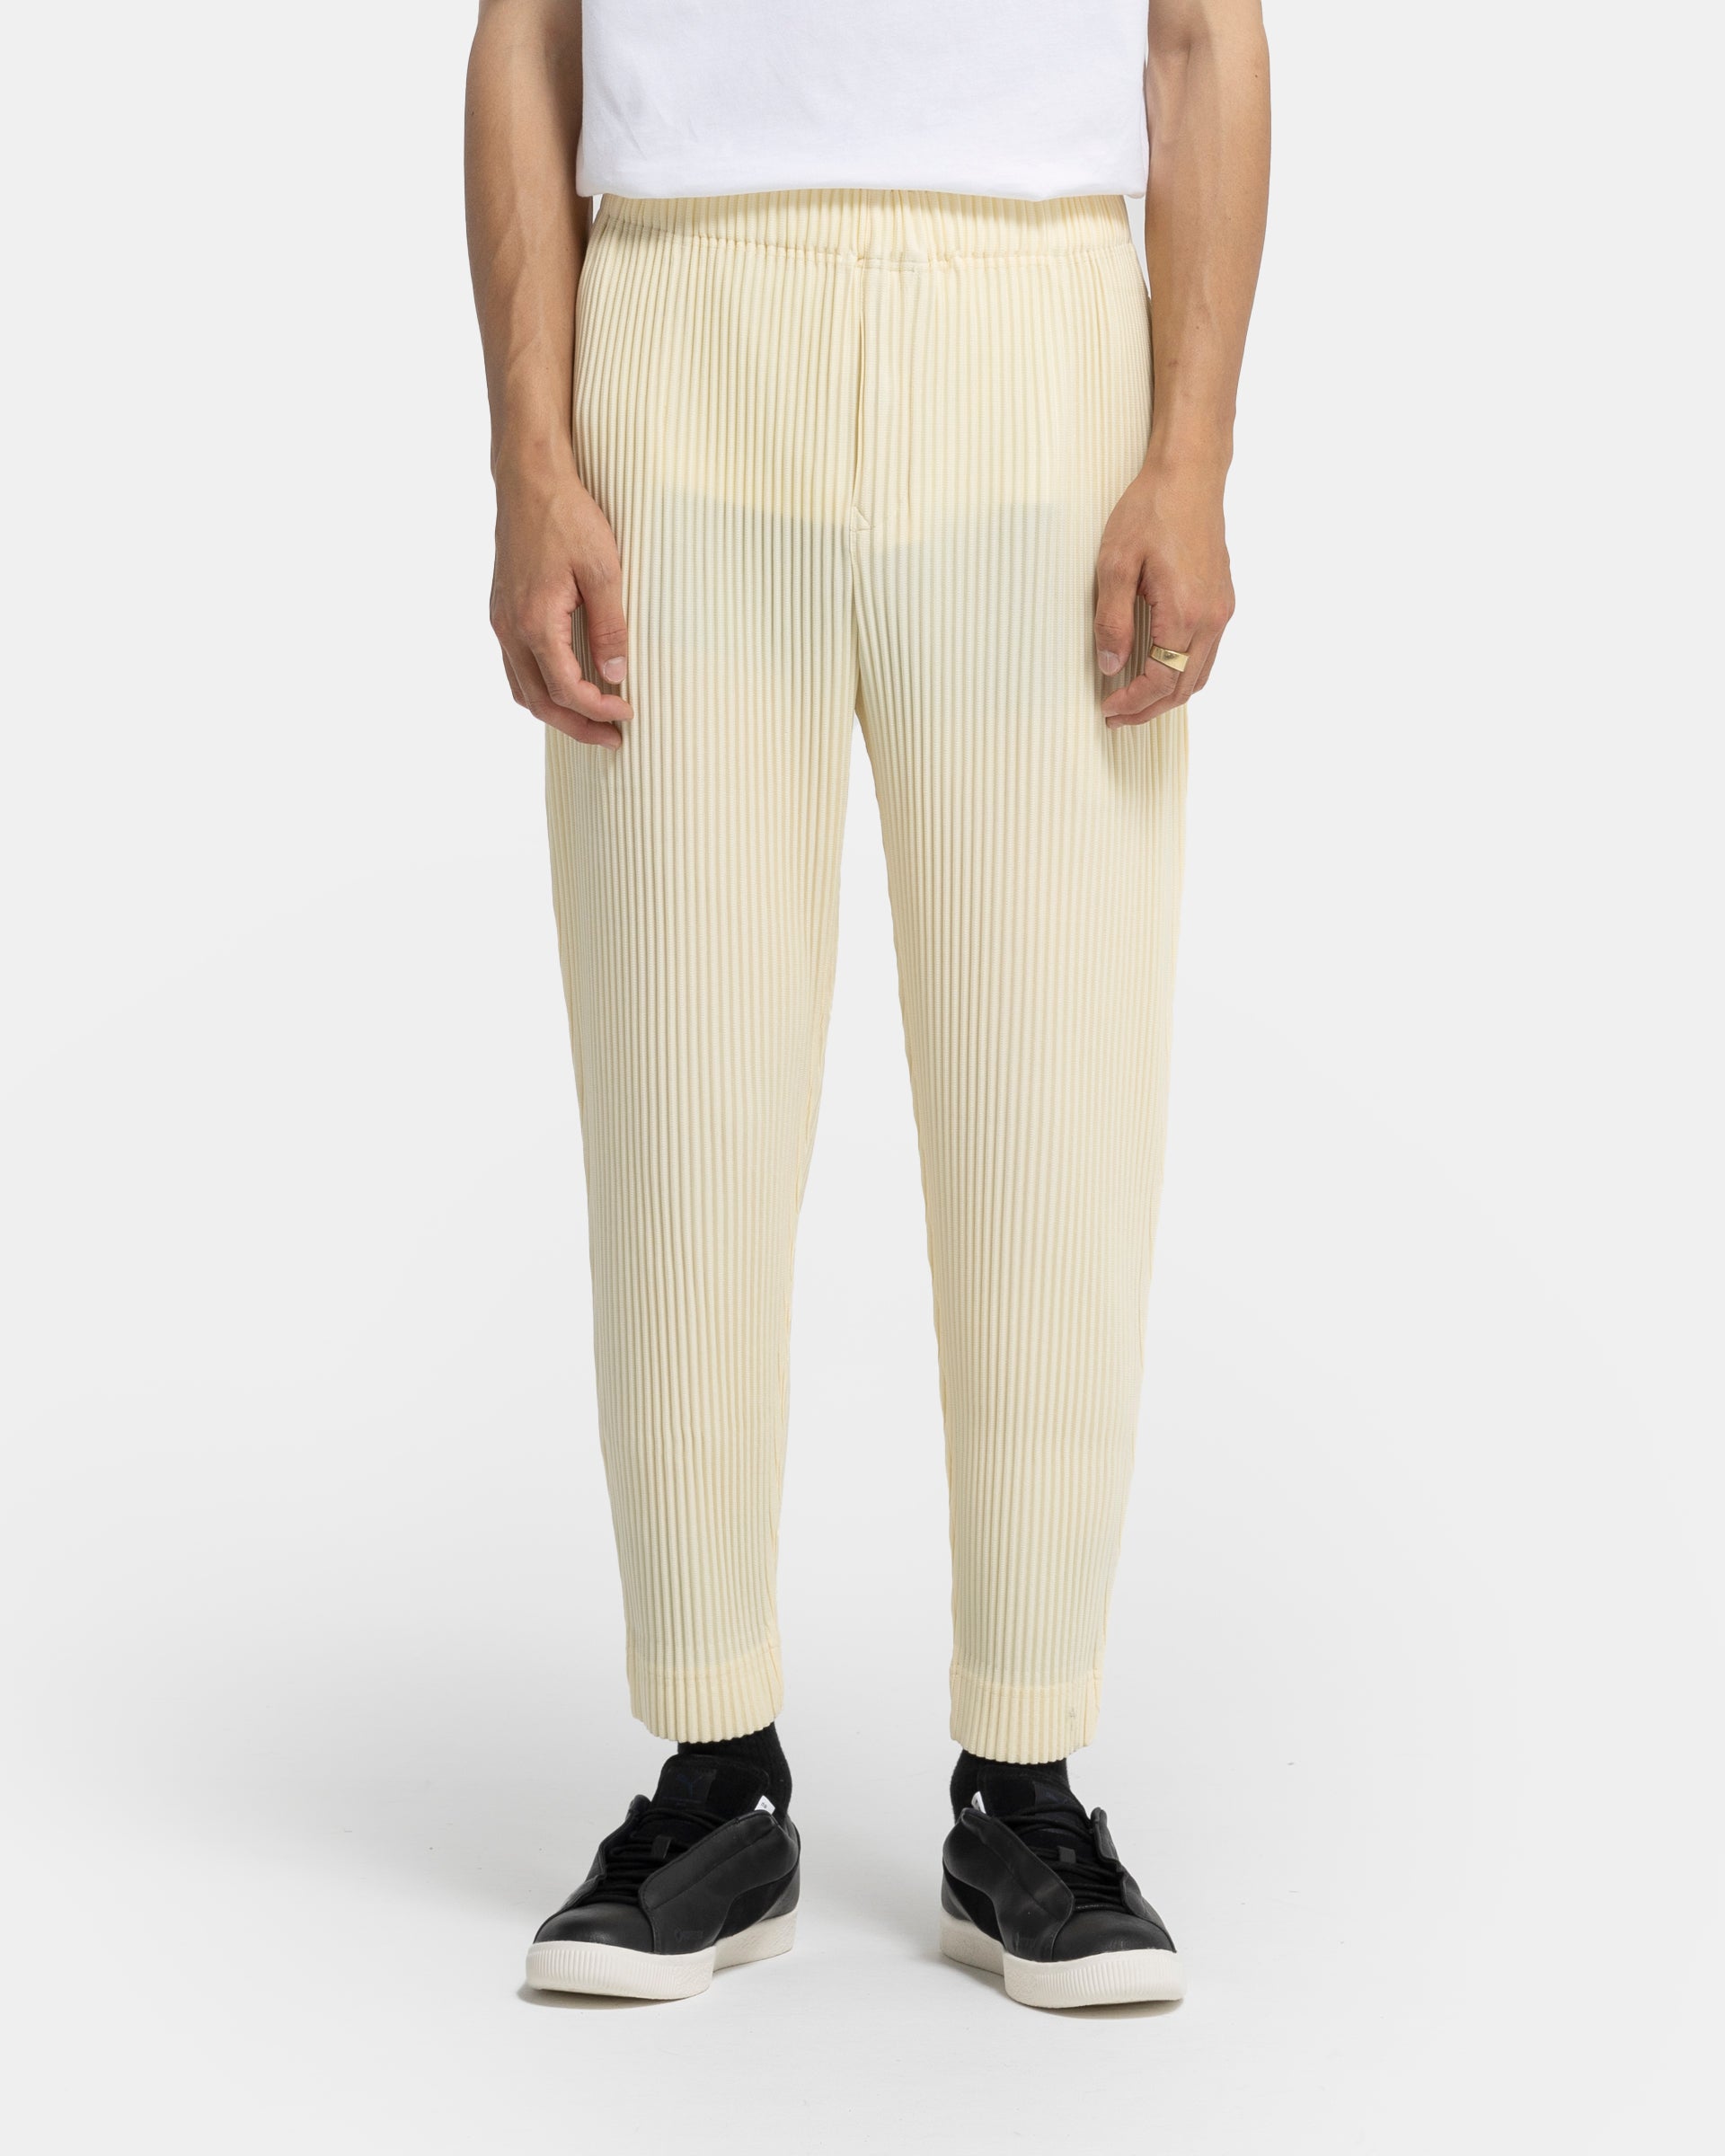 ASOS Light Yellow Twill Satin Buttermilk Pleated Side Zip Wide Leg Pants  Size 2 | eBay